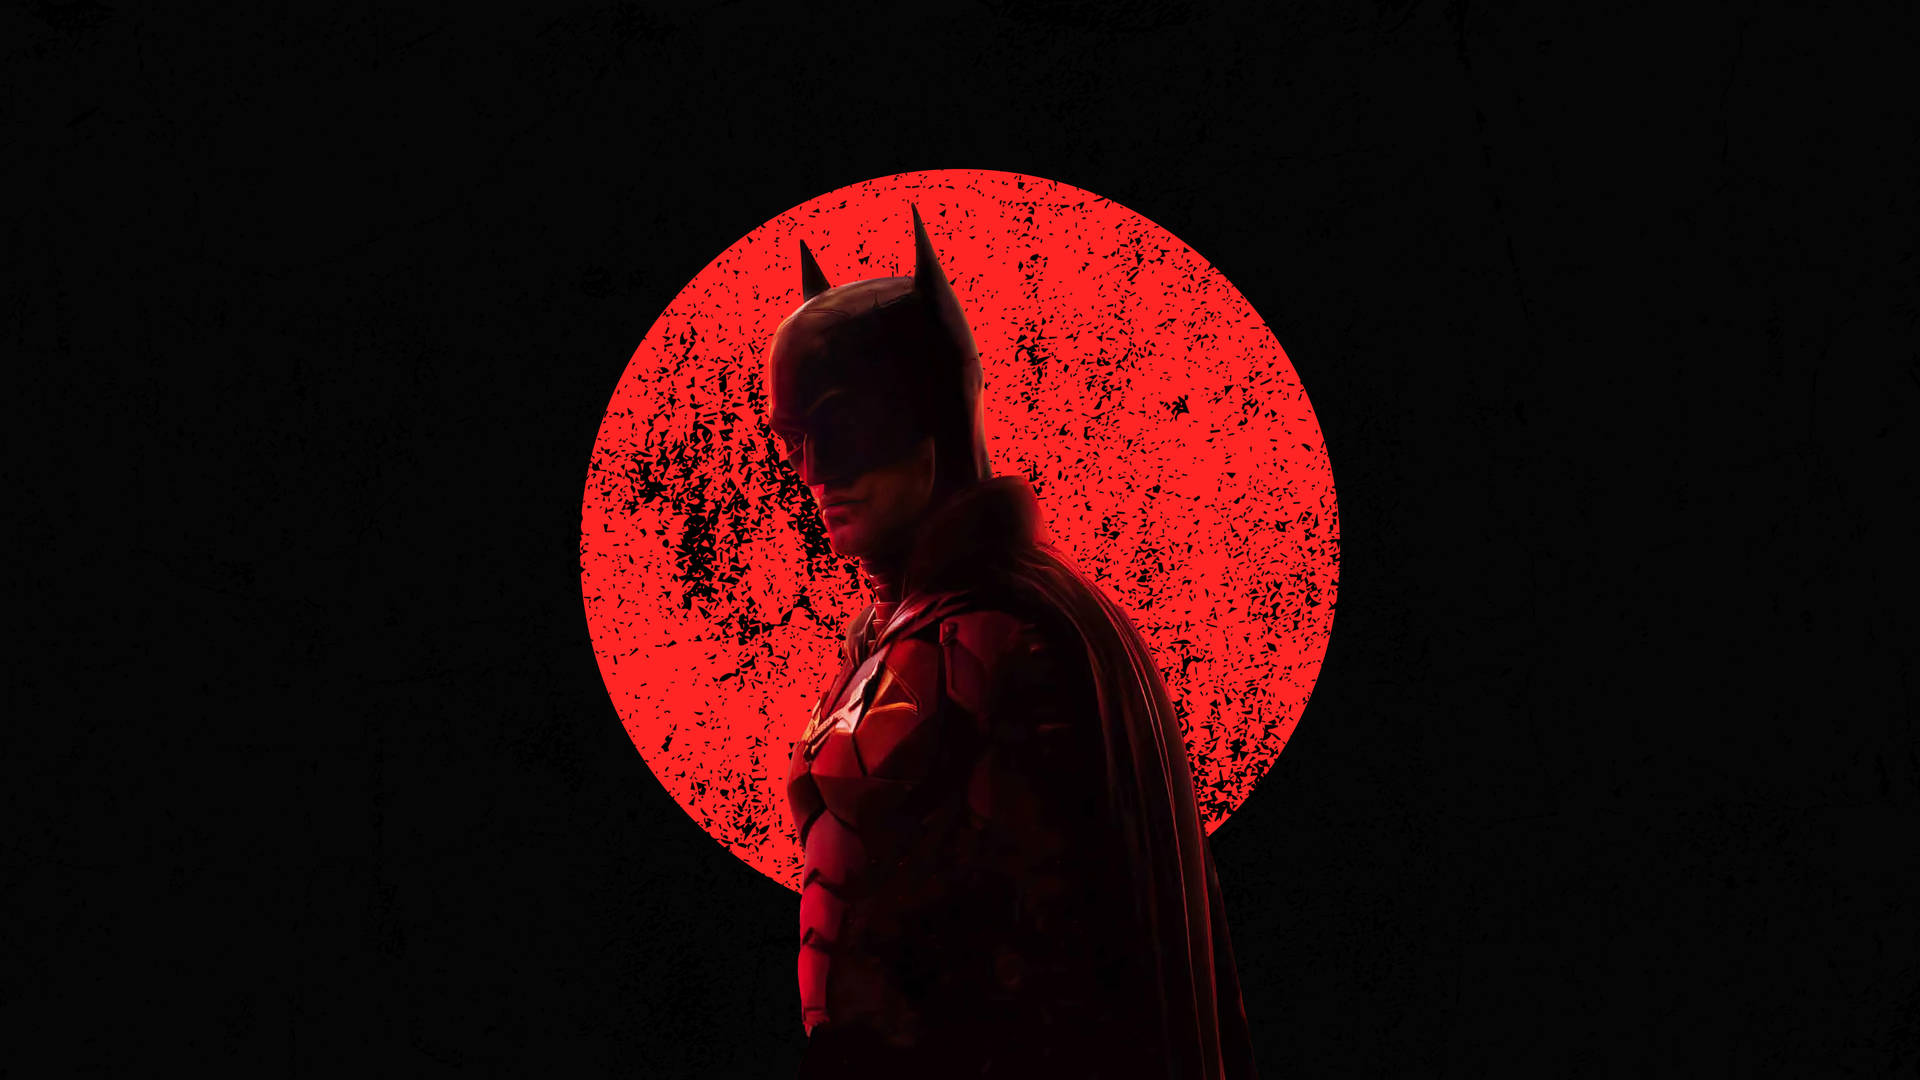 Black & Red Batman Wallpapers - Best Superhero Wallpapers HD